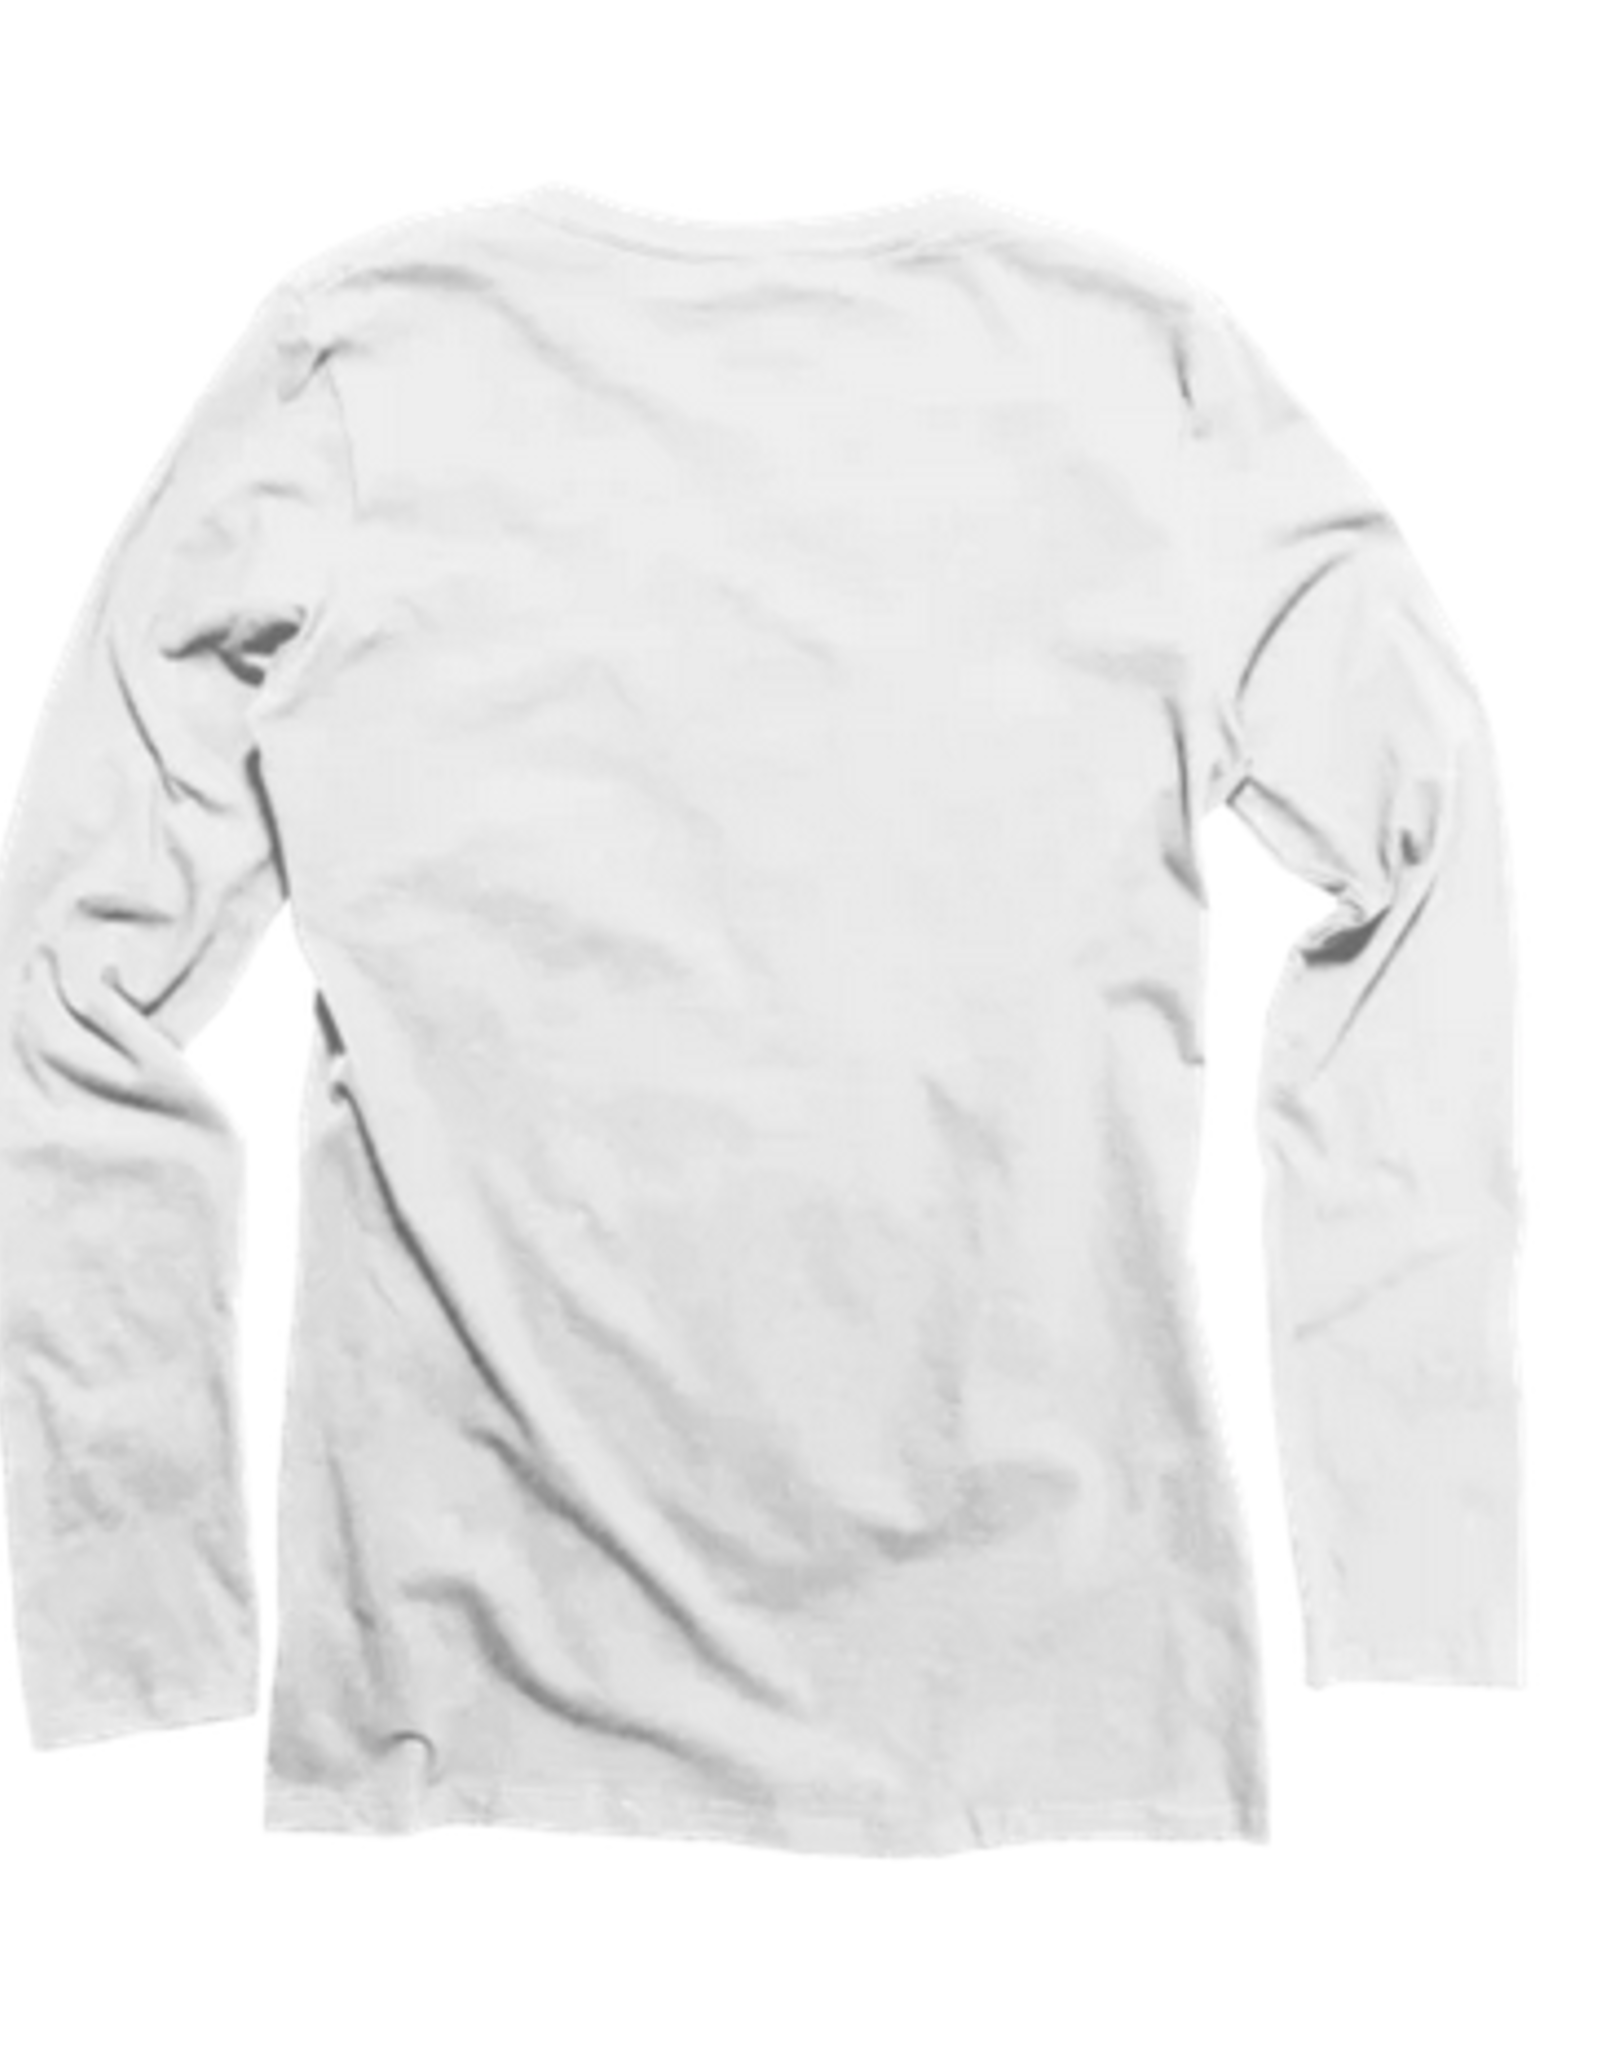 Goex White Cotton T Shirt Long Sleeve M -USA/Haiti